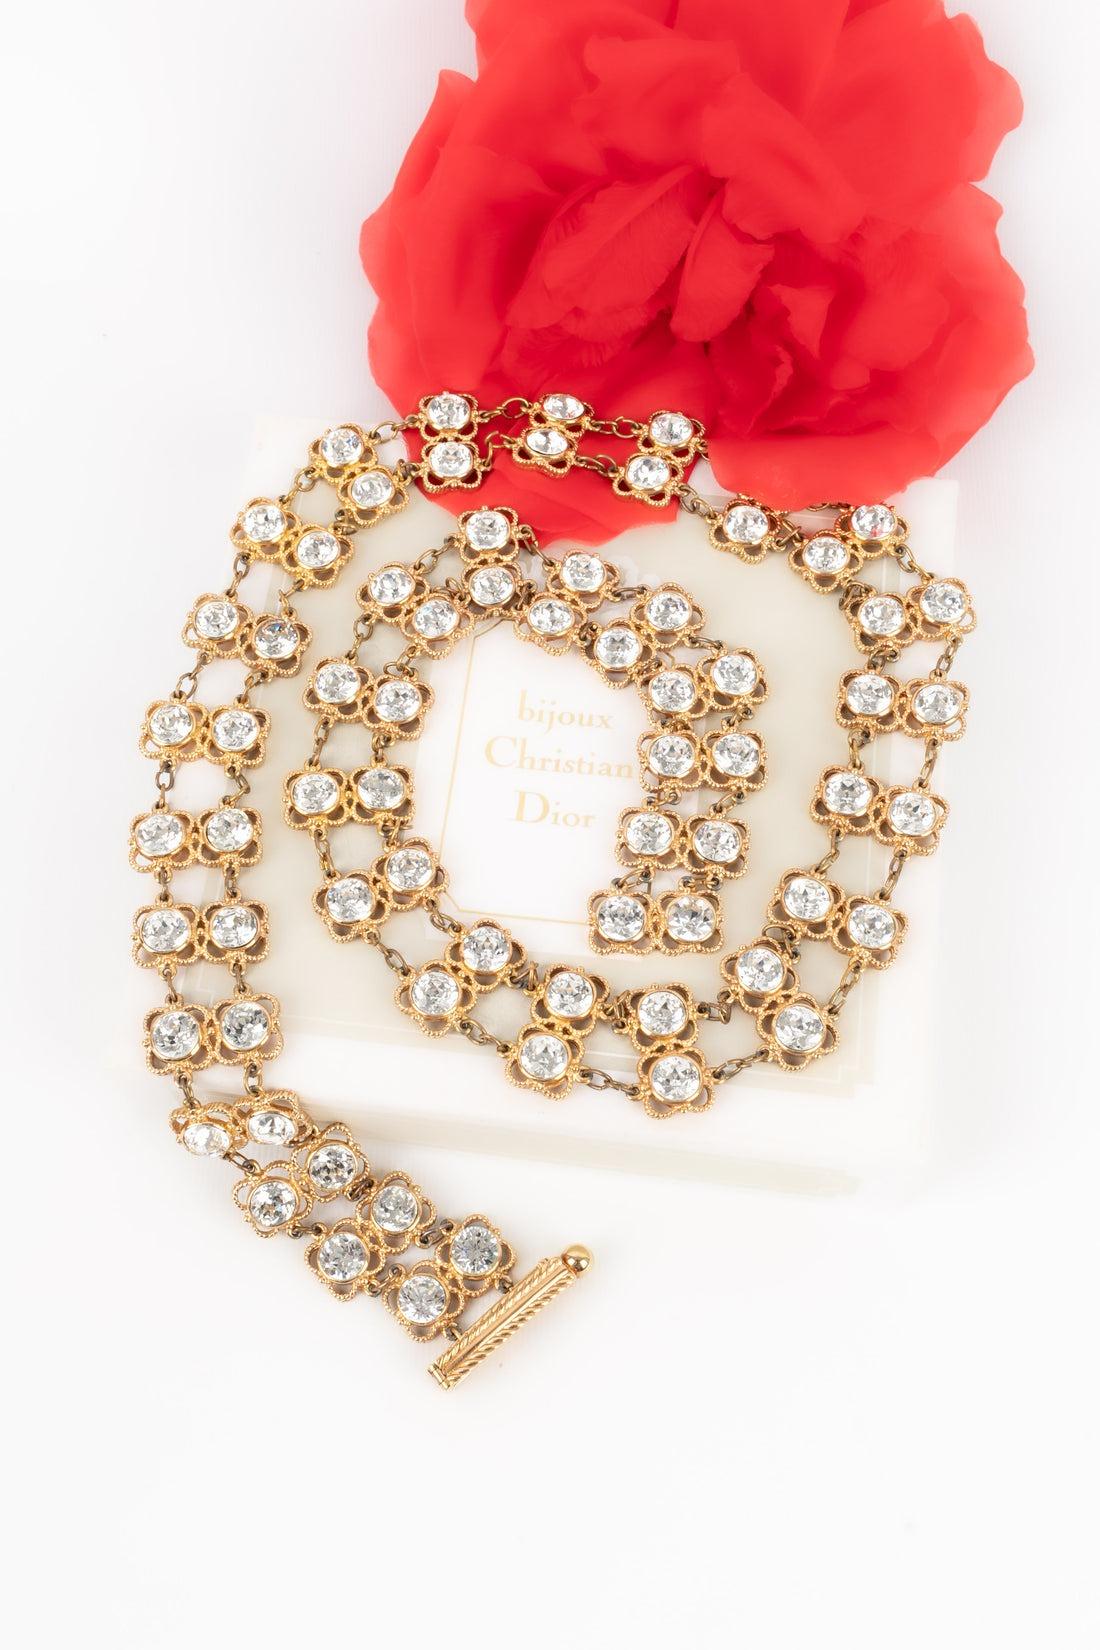 Dior Jewelry Belt in Golden Metal and Rhinestones For Sale 6